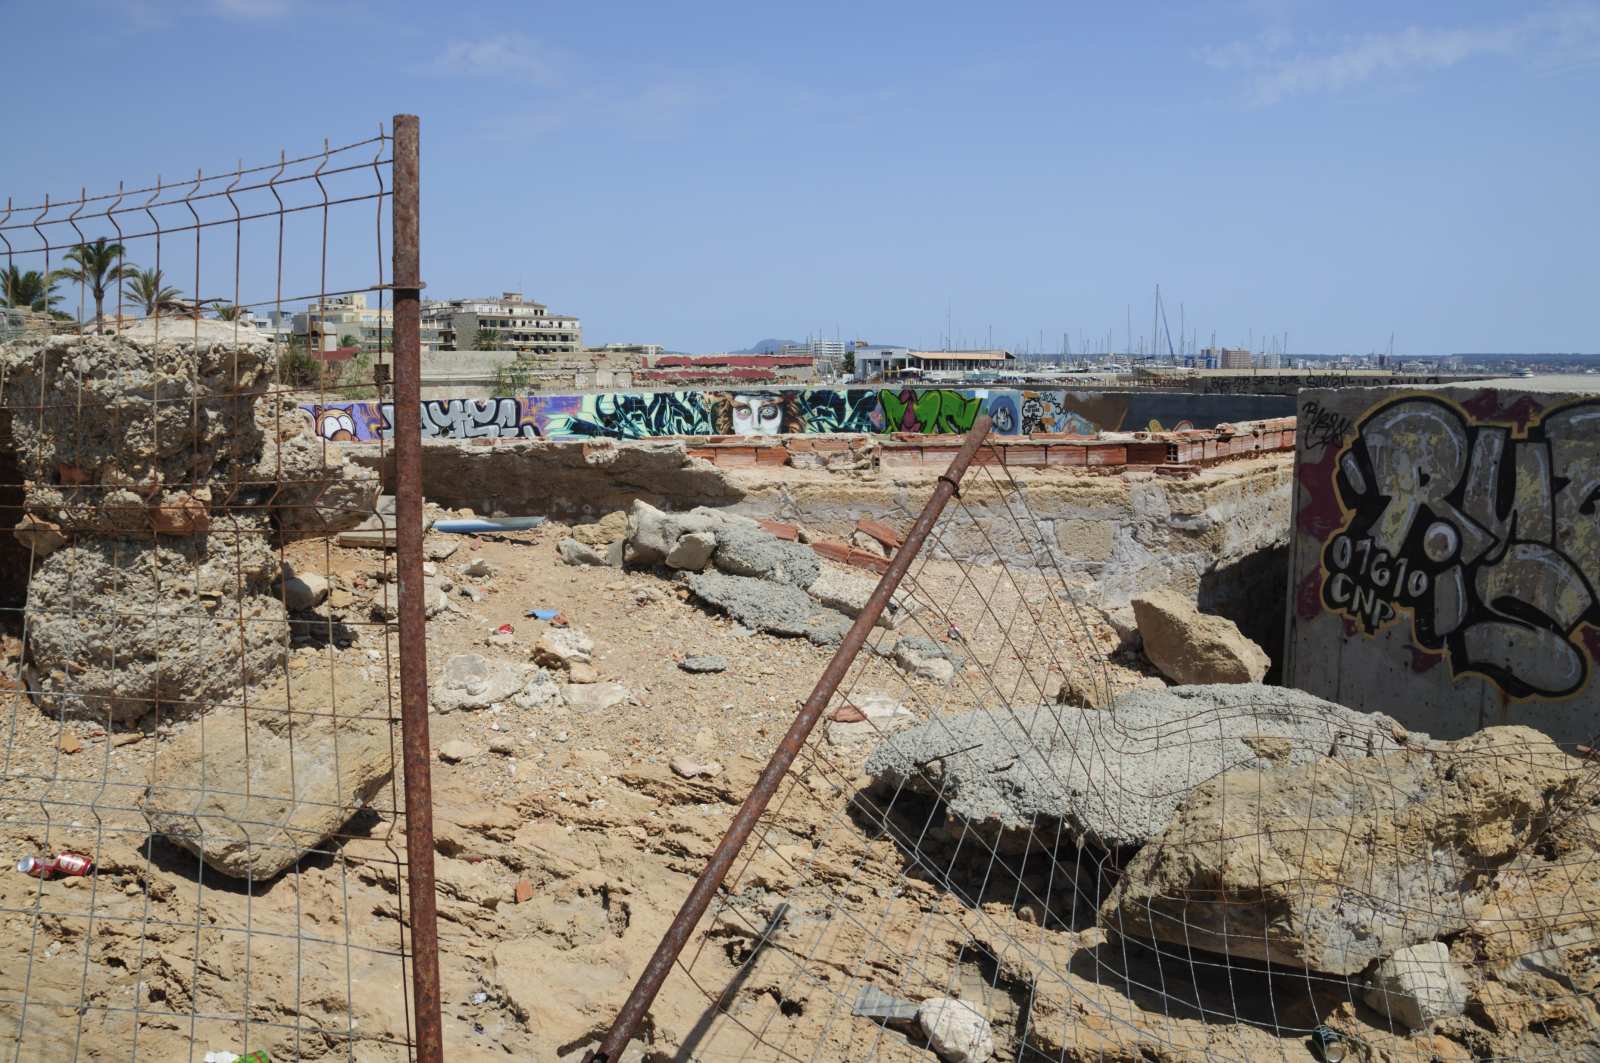 Building law in Mallorca - demolition symbol image